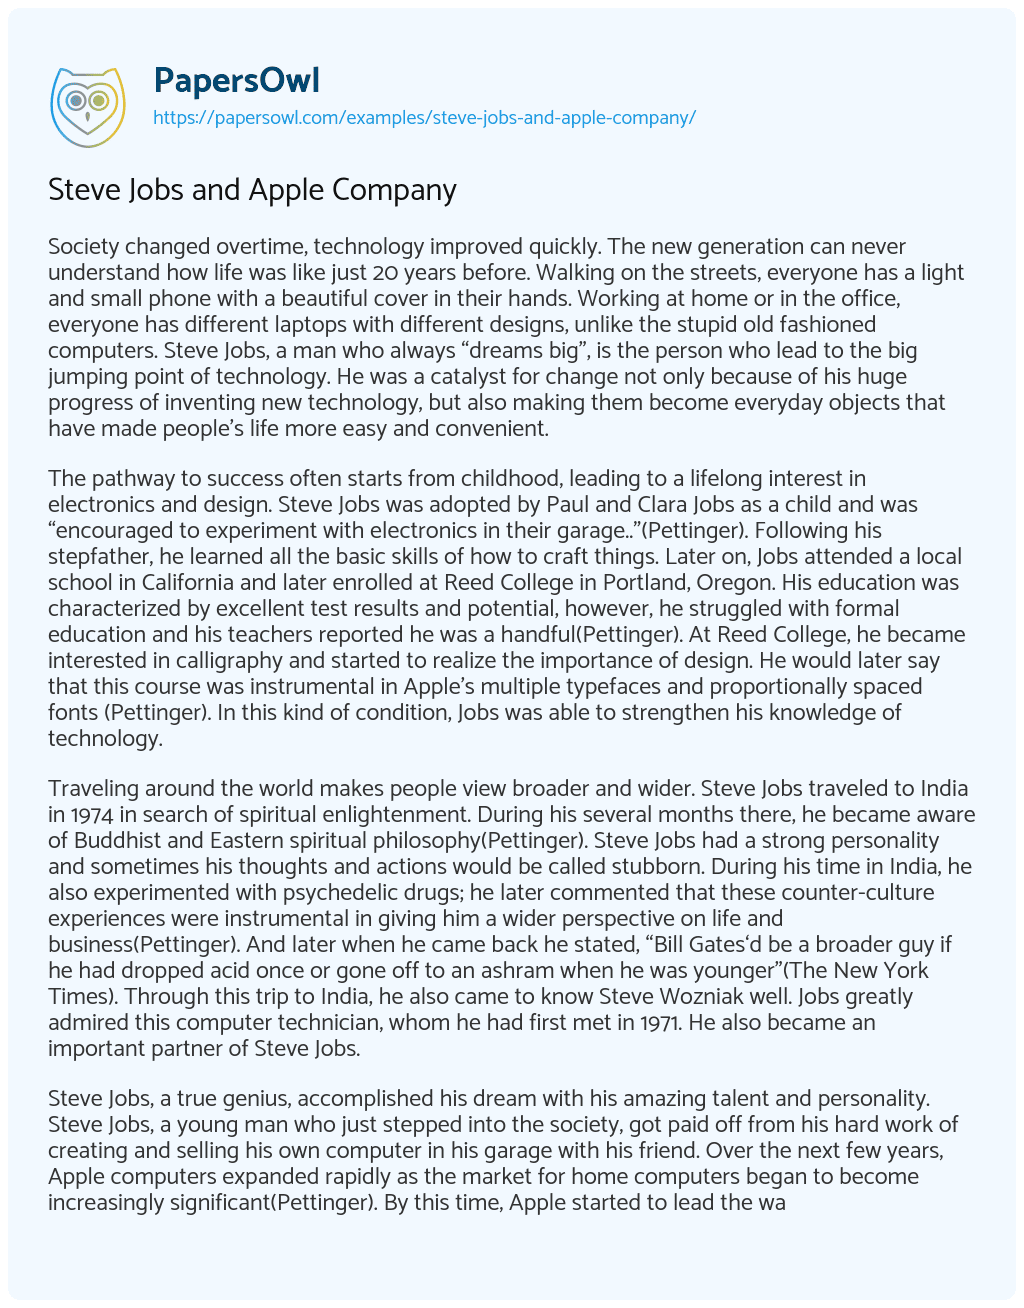 Essay on Steve Jobs and Apple Company